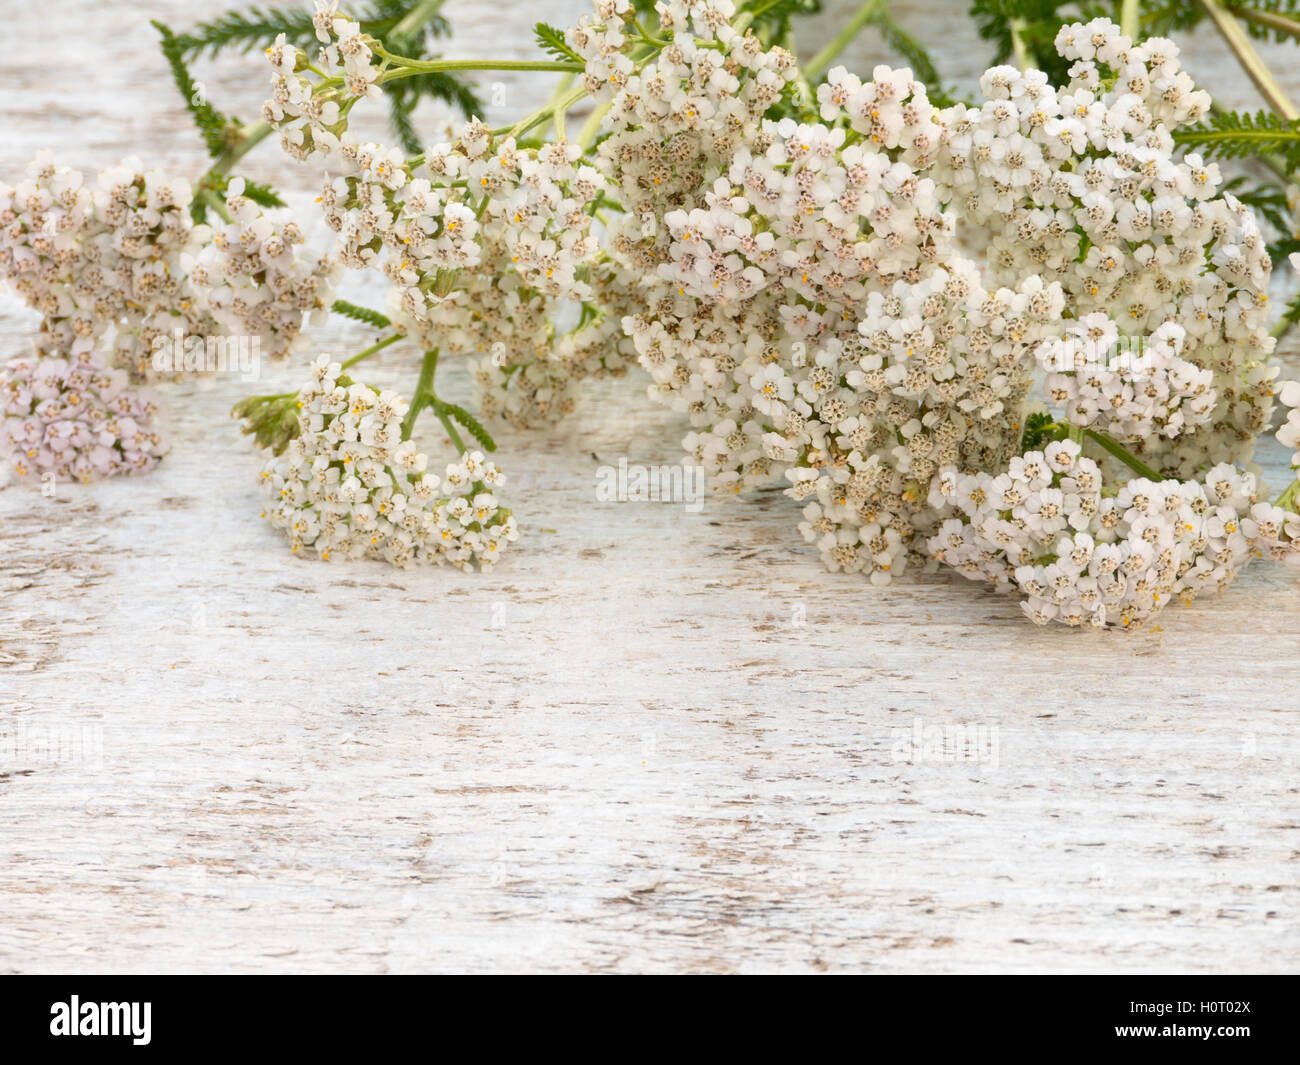 Achillea millefolium flowers heap on the white rough painted background Stock Photo